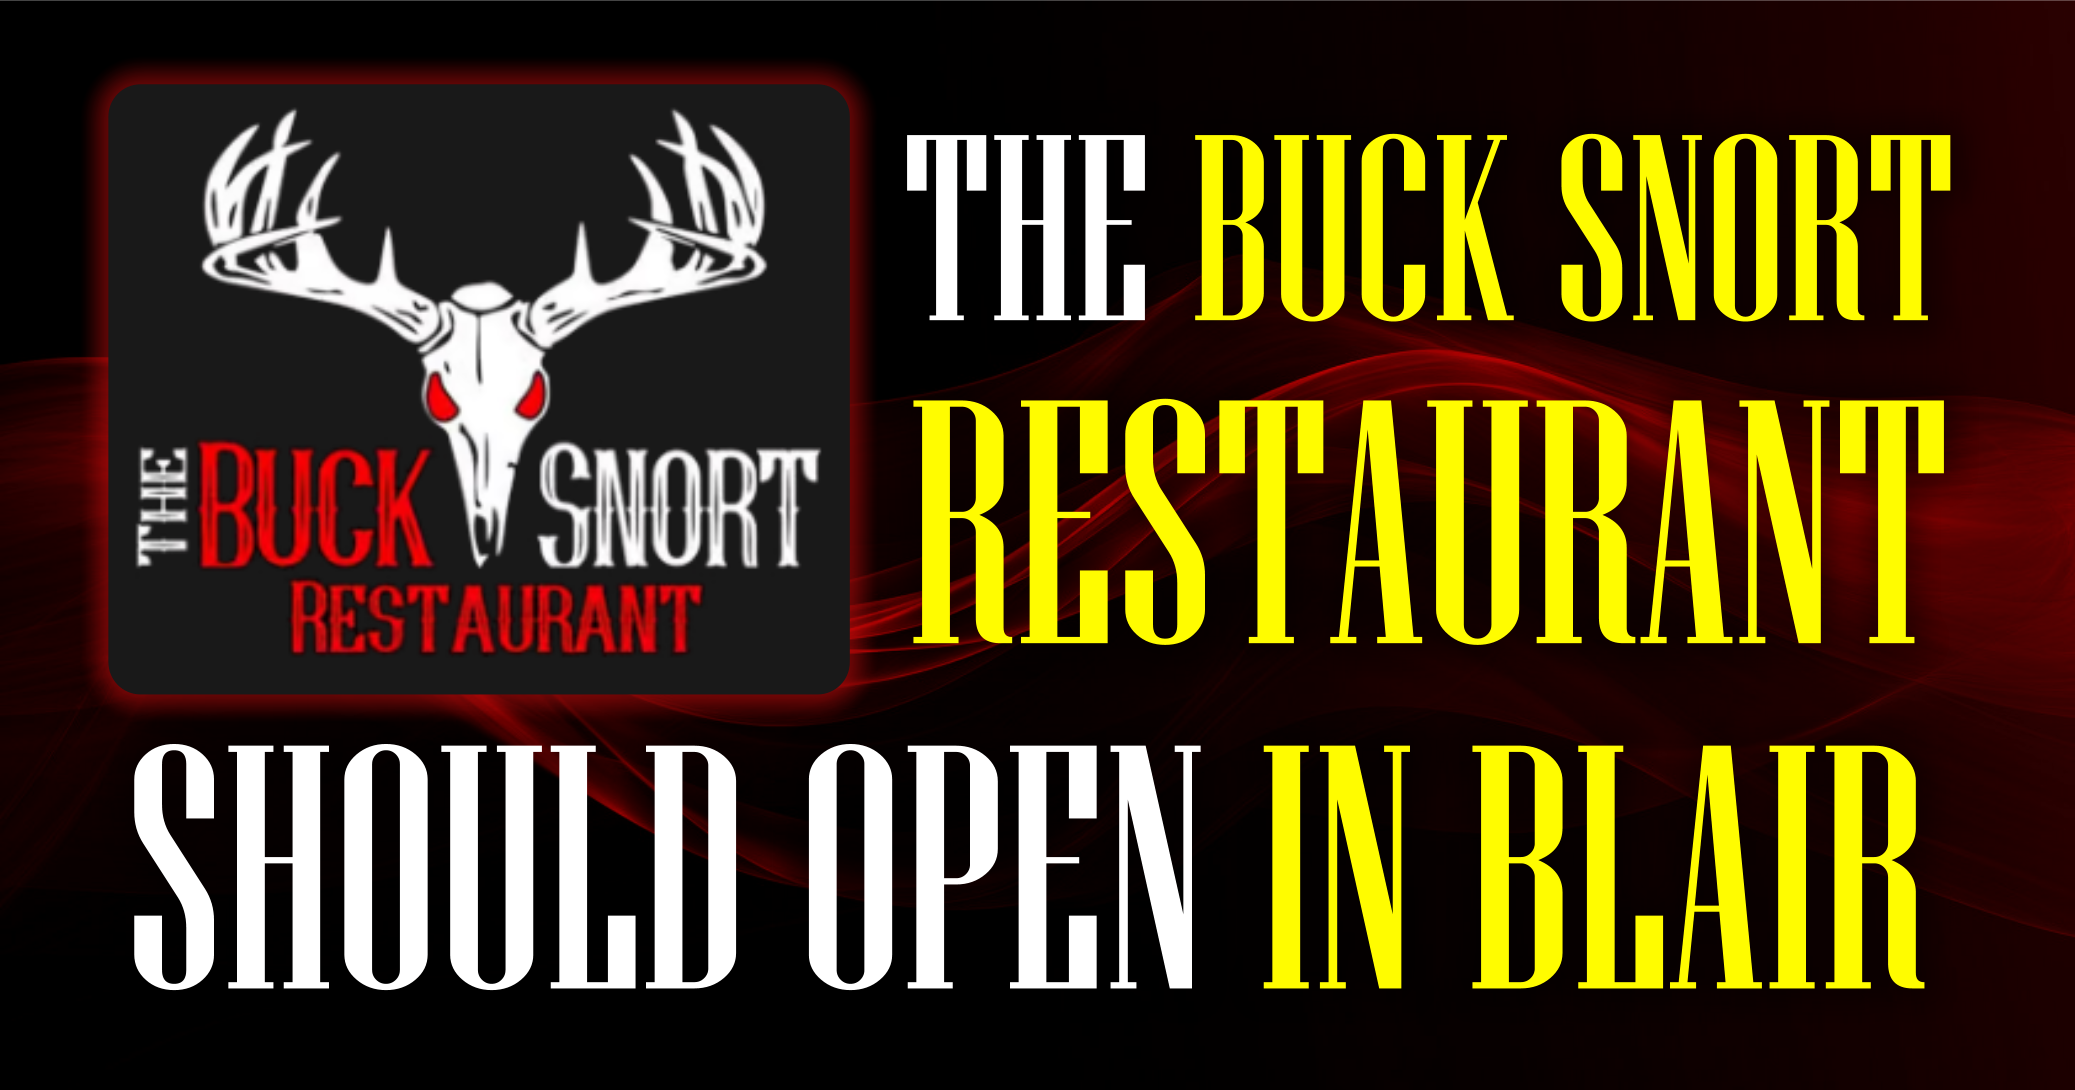 The Buck Snort Restaurant